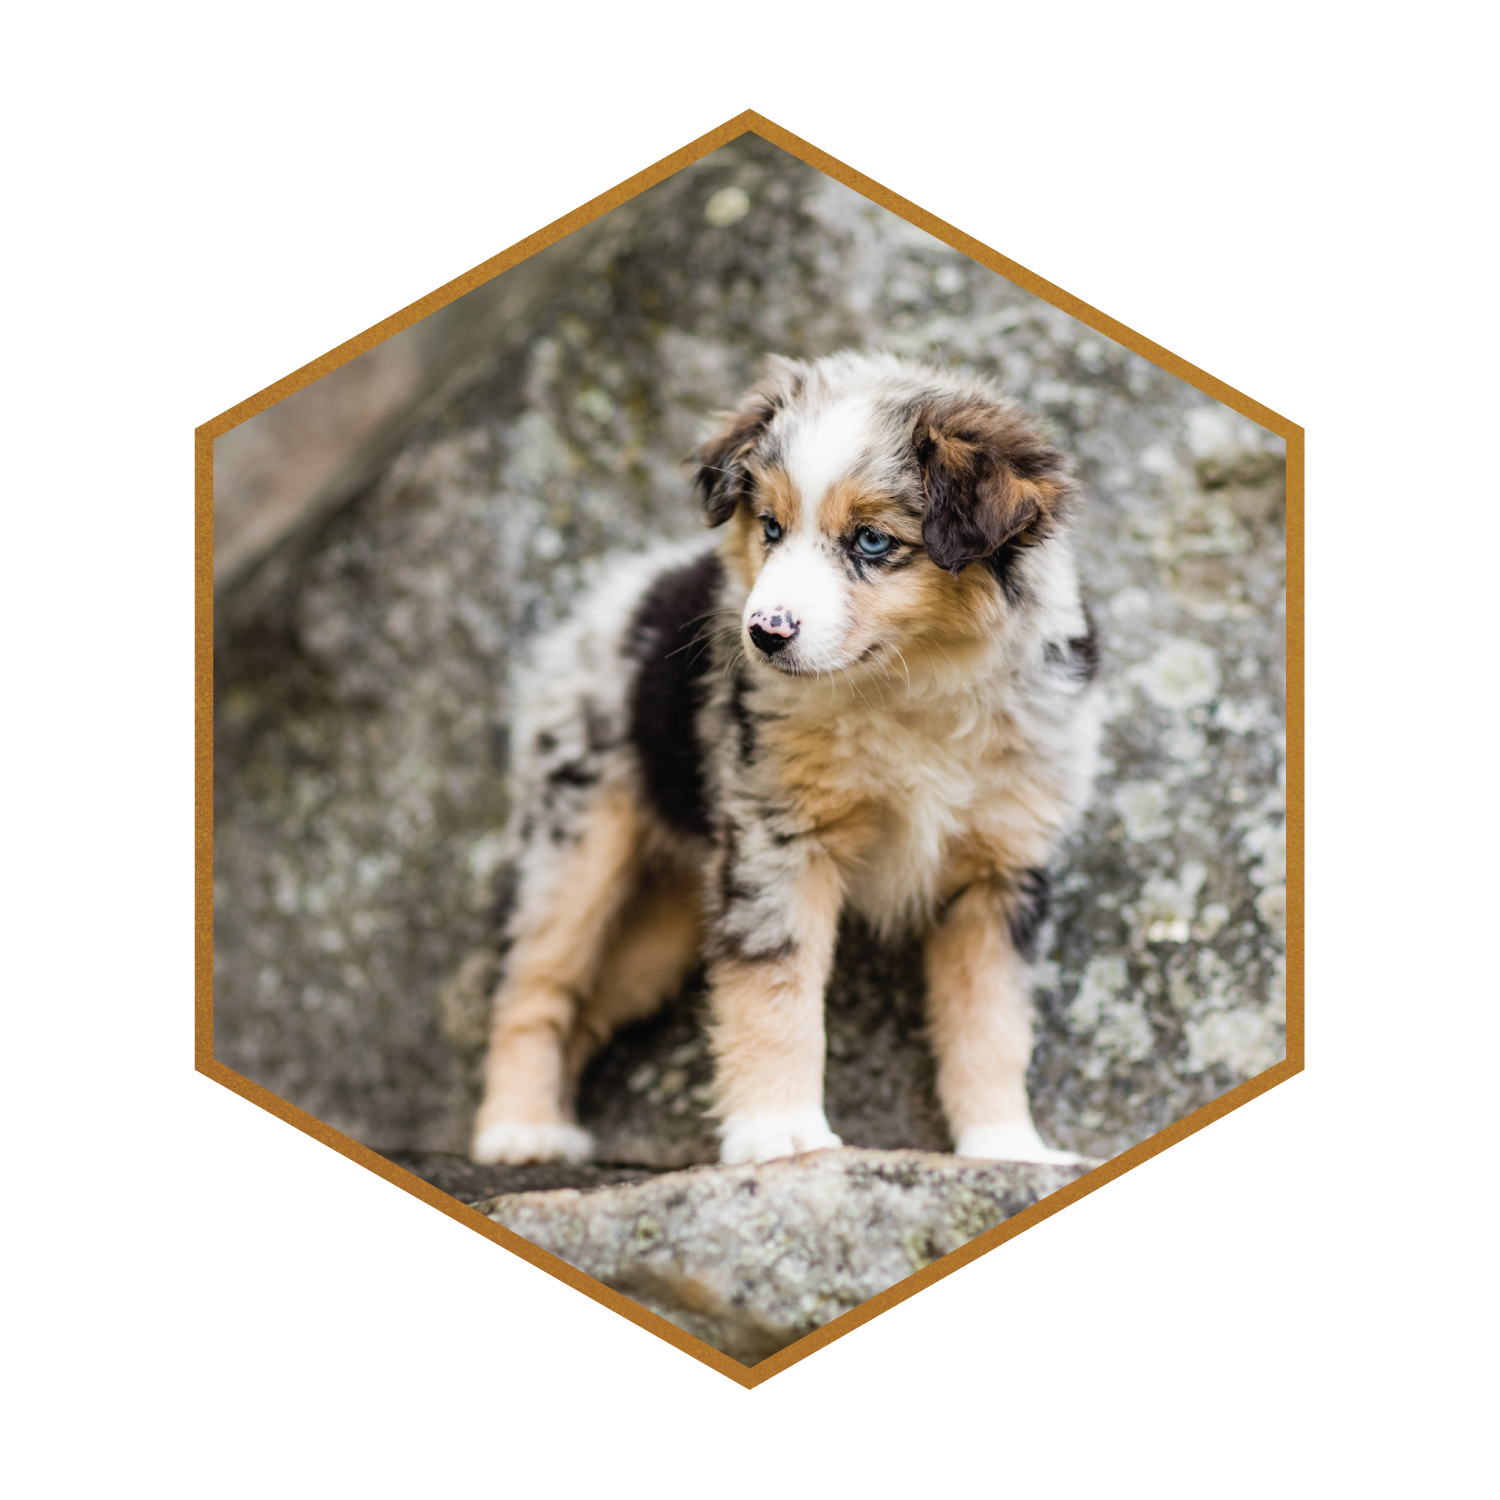 Australian Shepherd Dog Breed, Origin, History, Personality & Care Needs